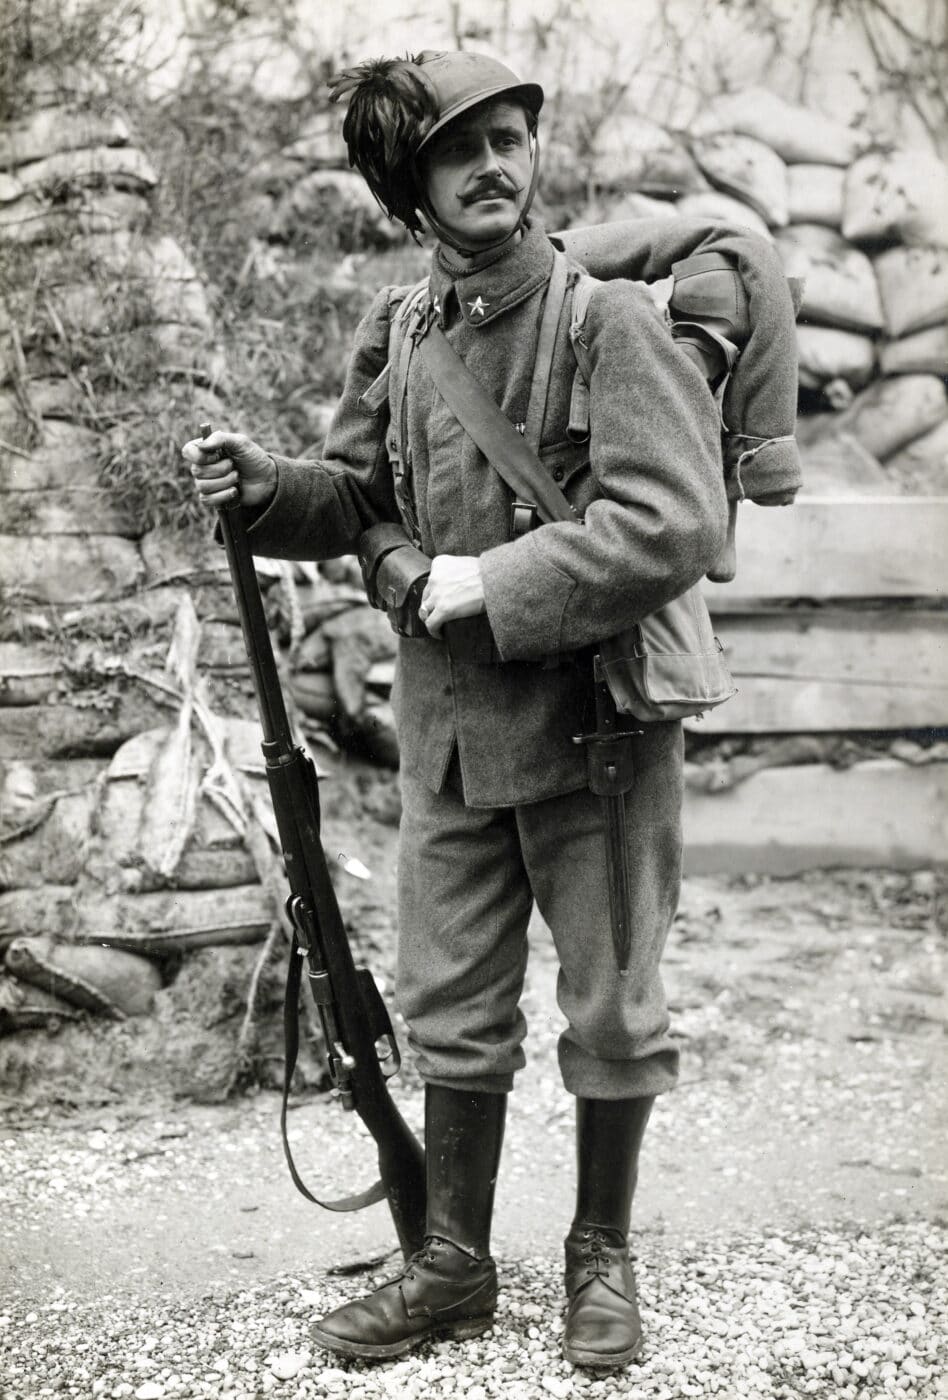 Italian Bersaglieri with Carcano rifle during WWI